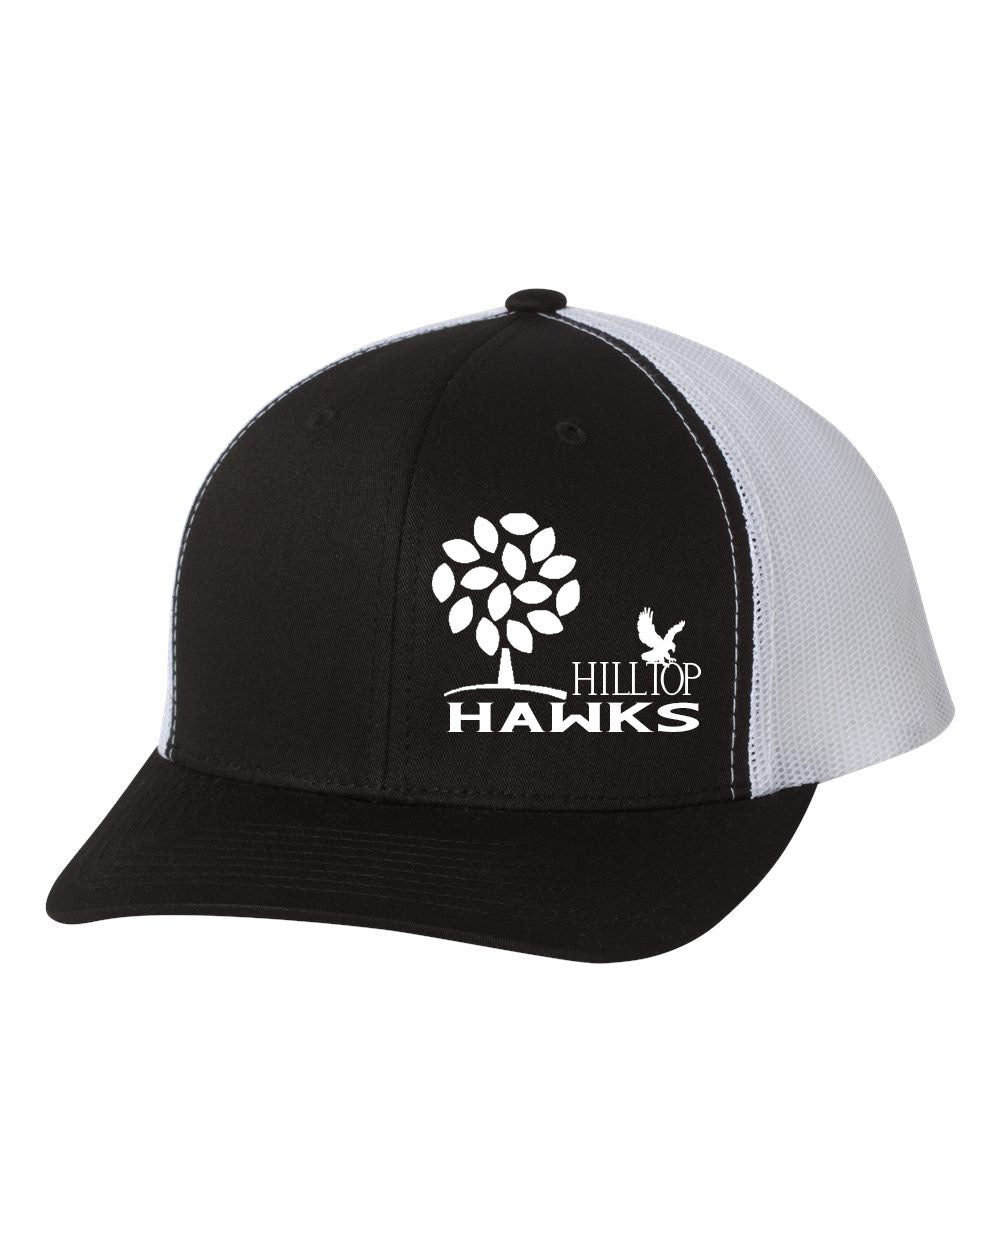 Hilltop Design 3 Trucker Hat